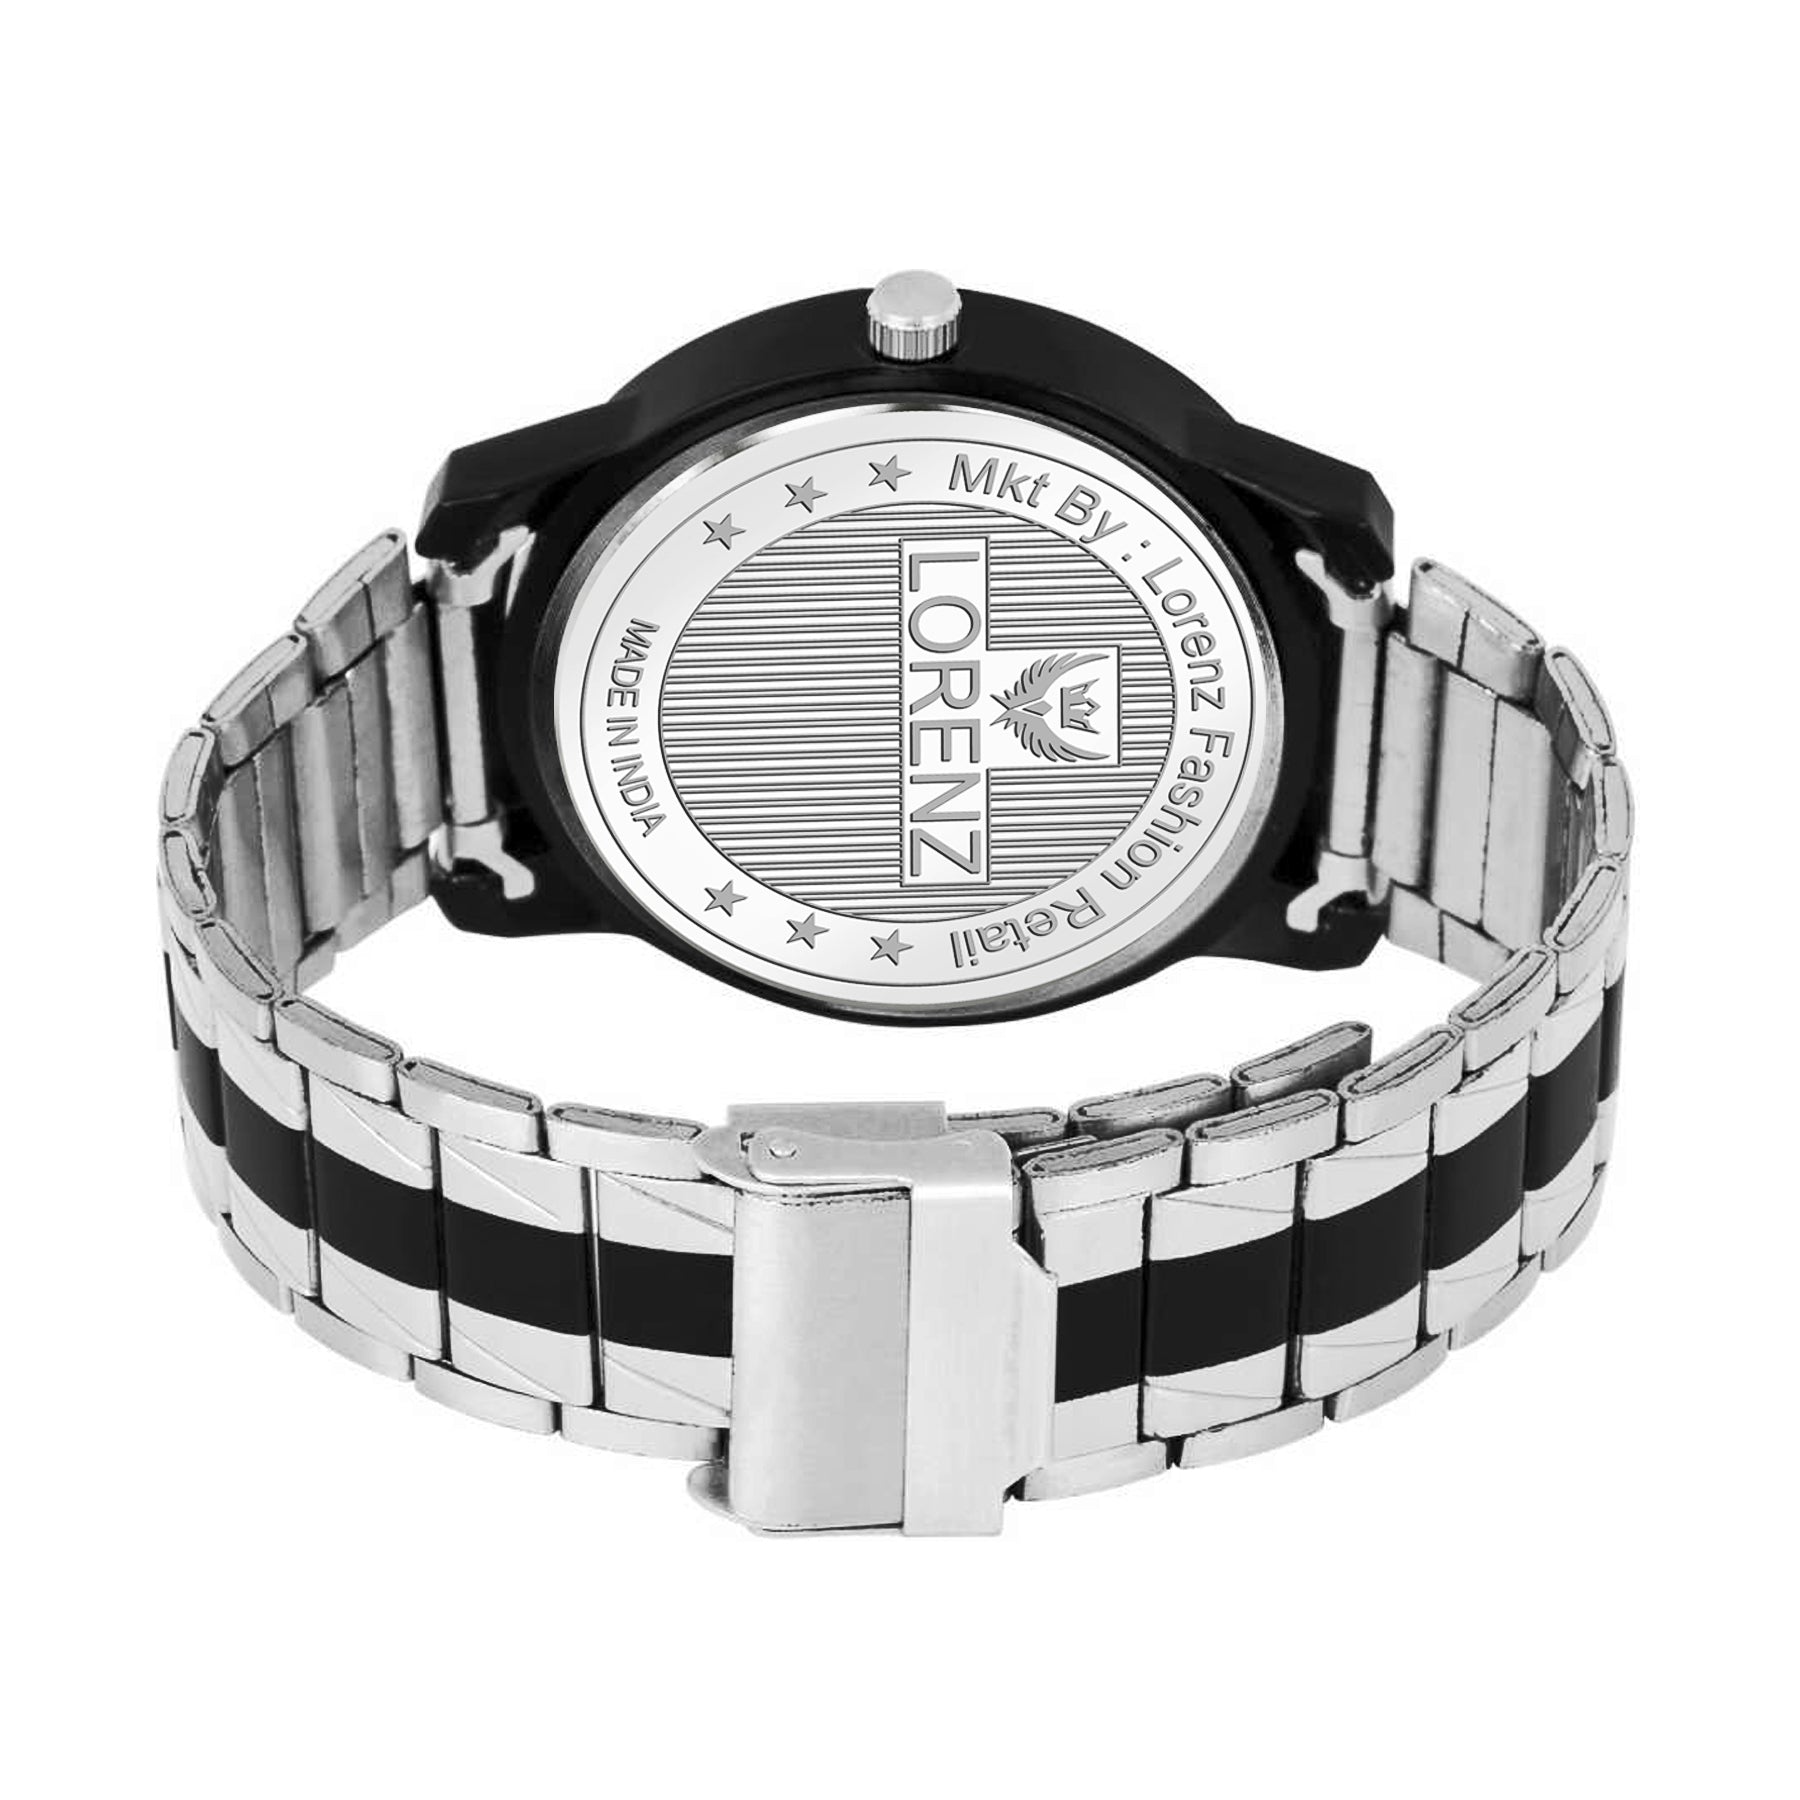 Lorenz Combo of Black Dial Watch & Black Wallet for Men- CM-3066WL-33